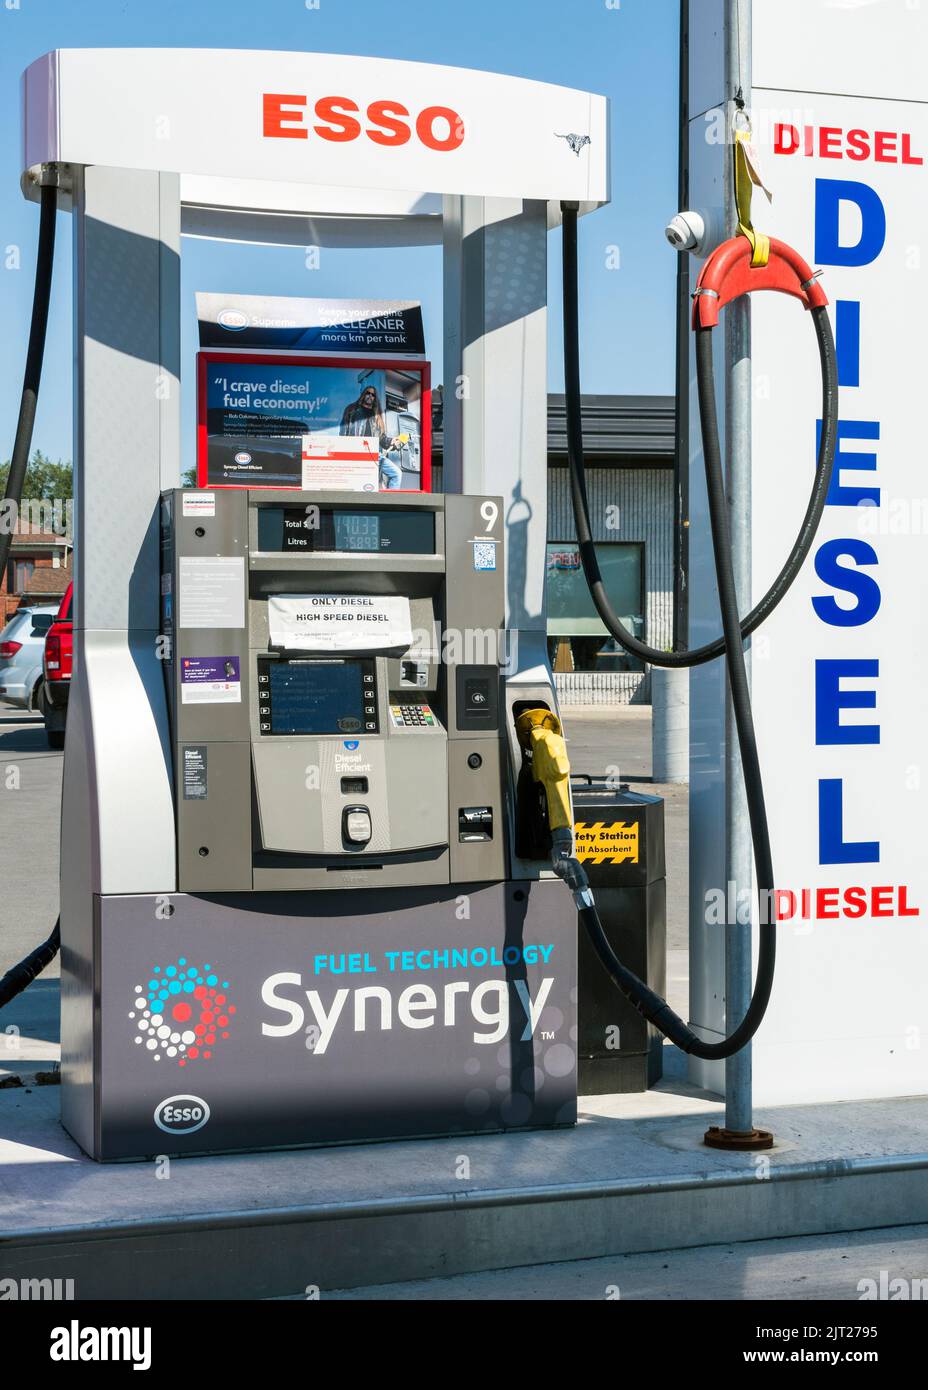 Esso diesel gas station, Canada Stock Photo